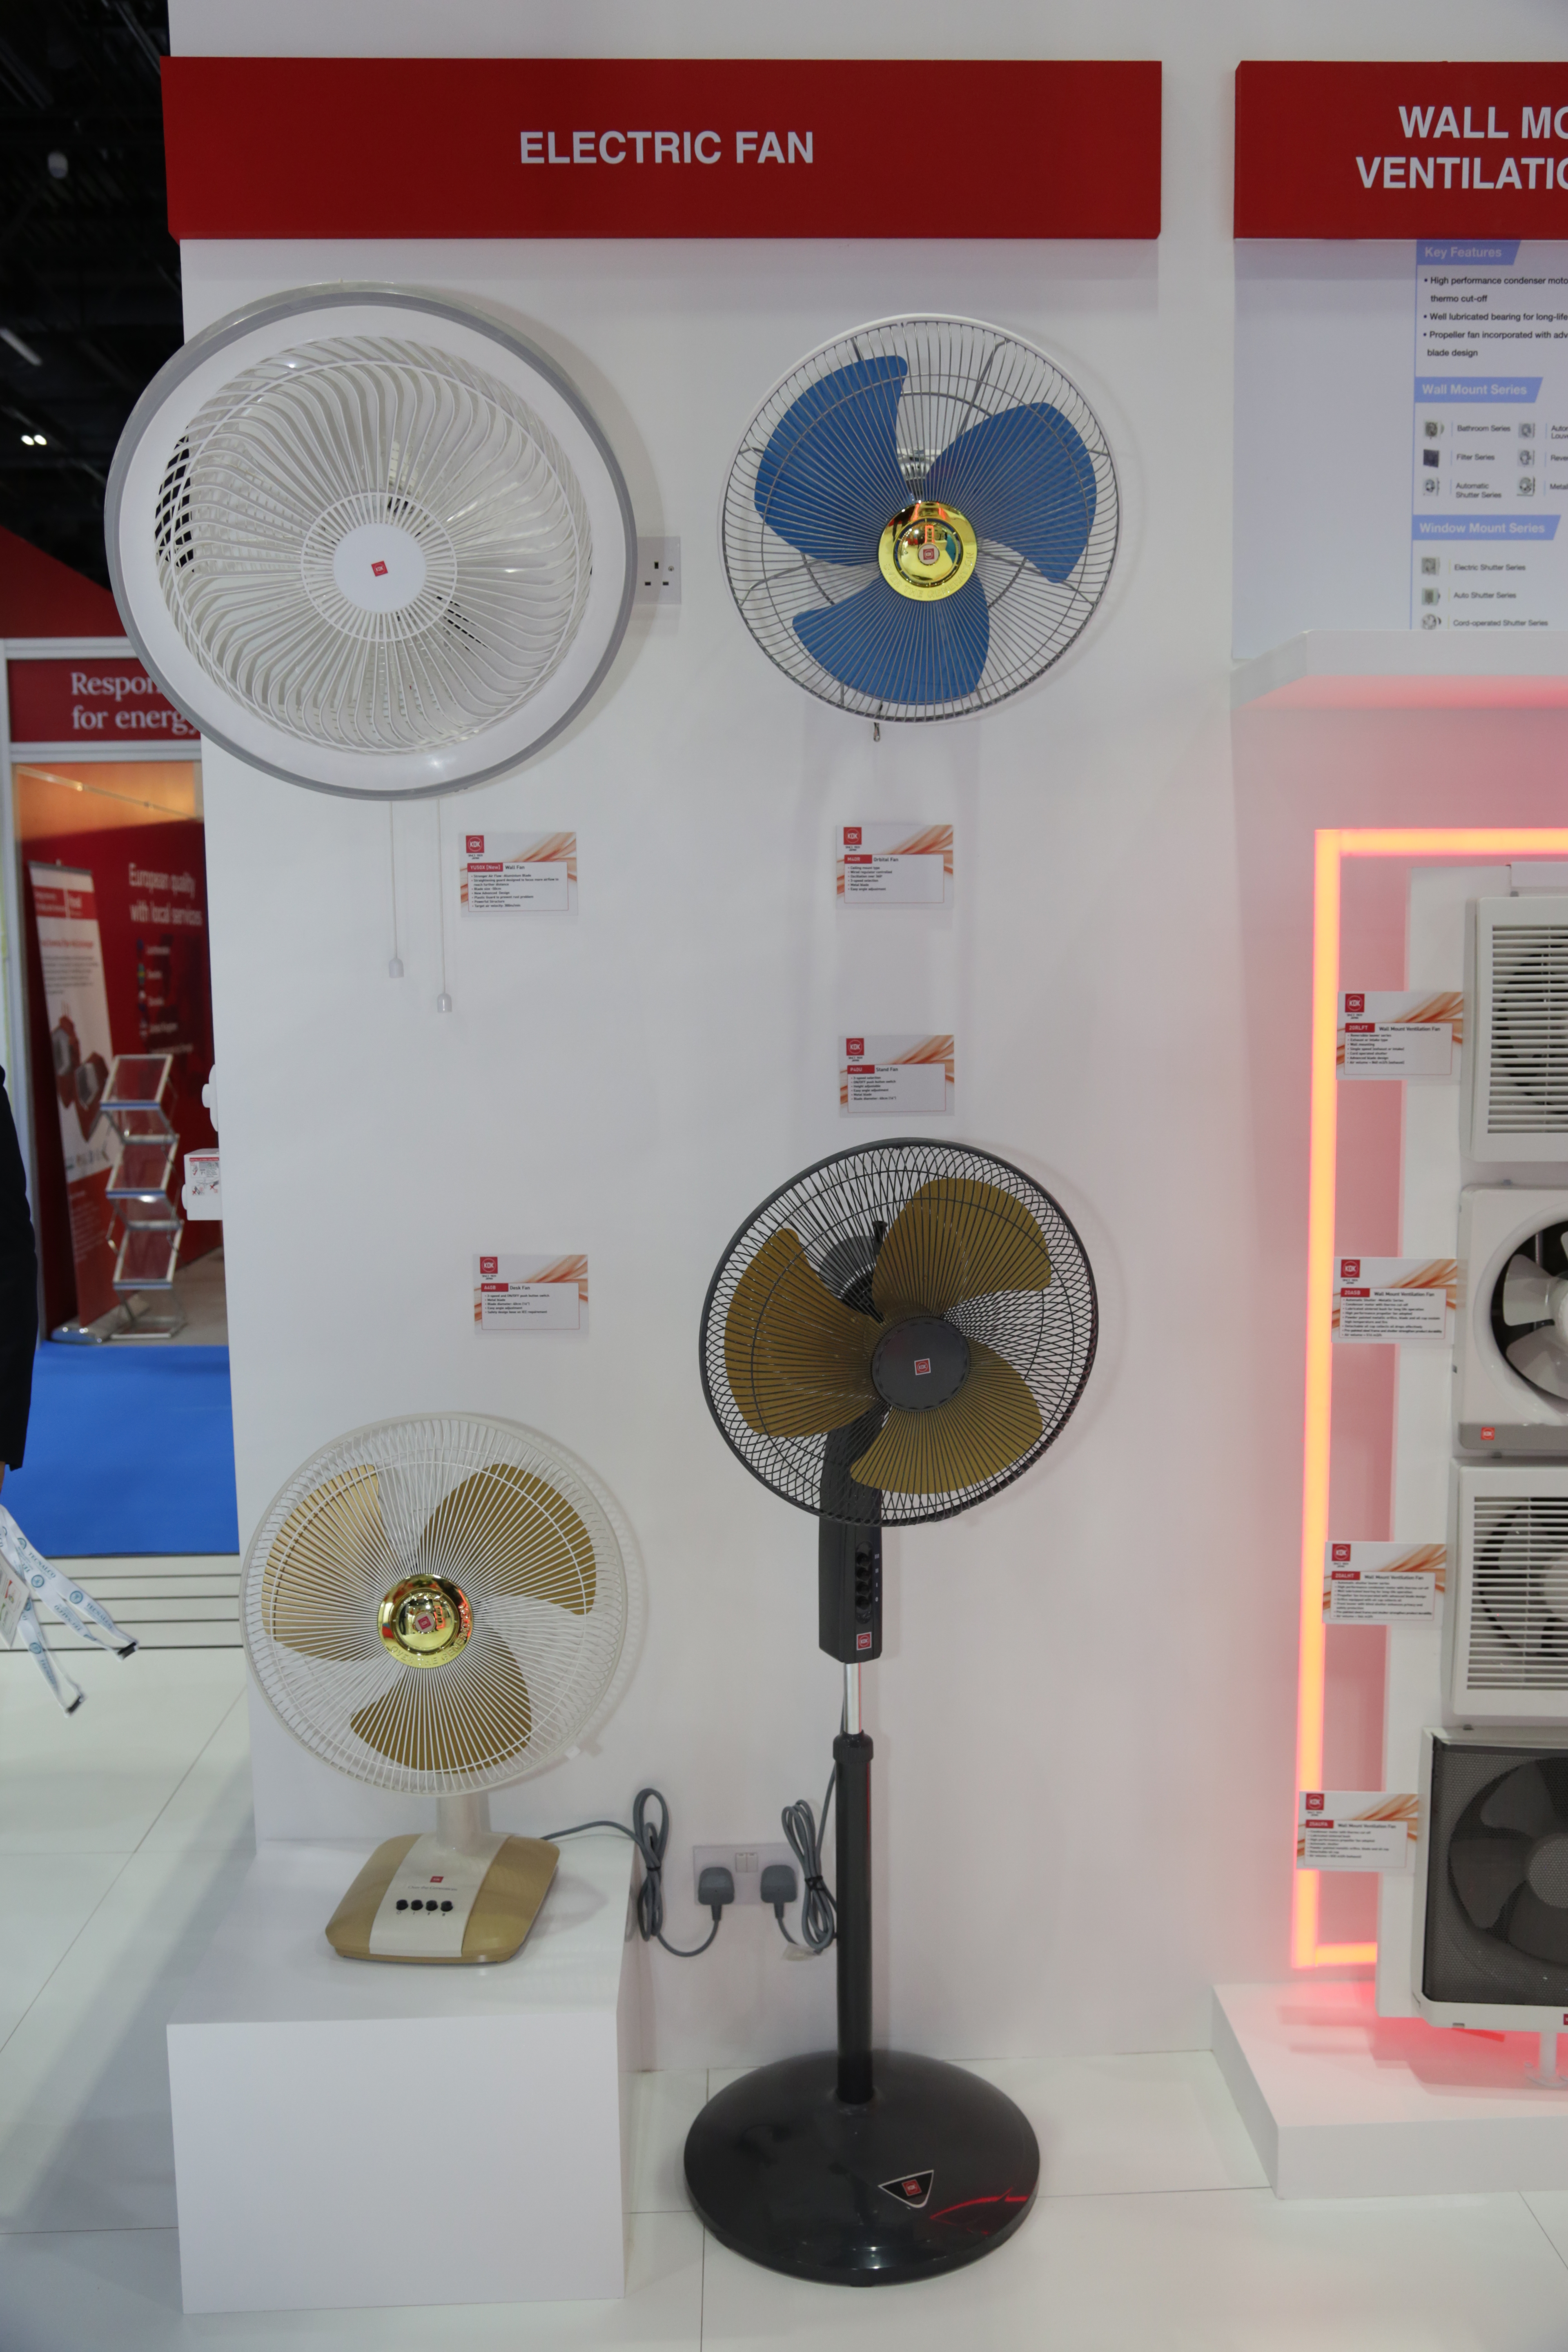 Electric Fan Display